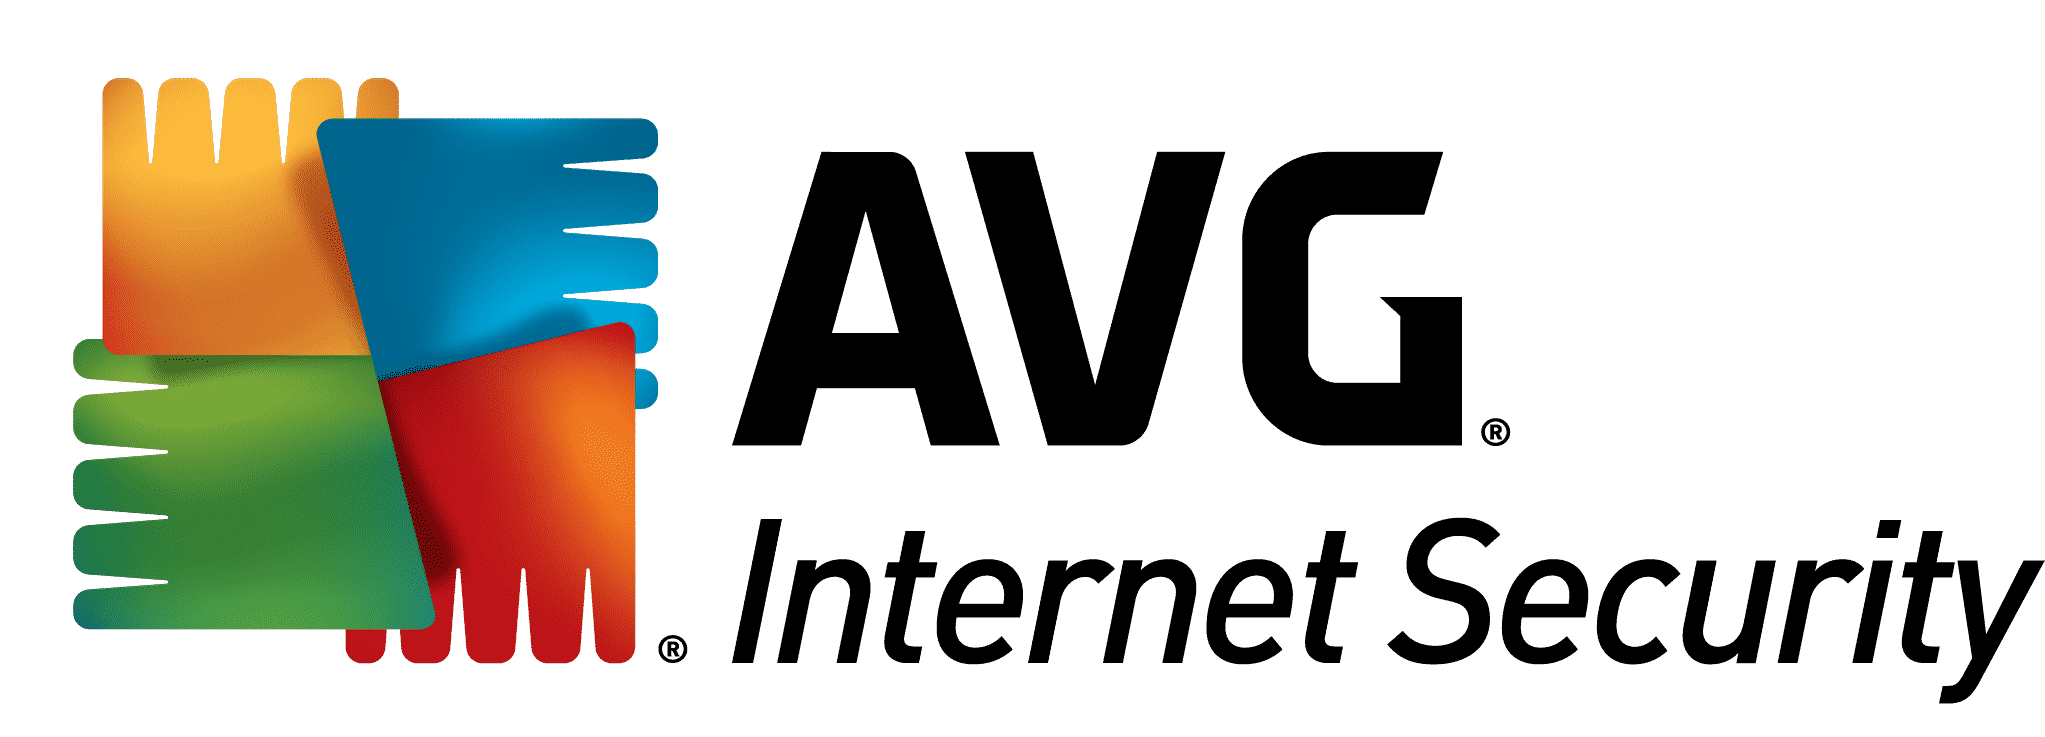 AVG Internet Security (Latest Version)